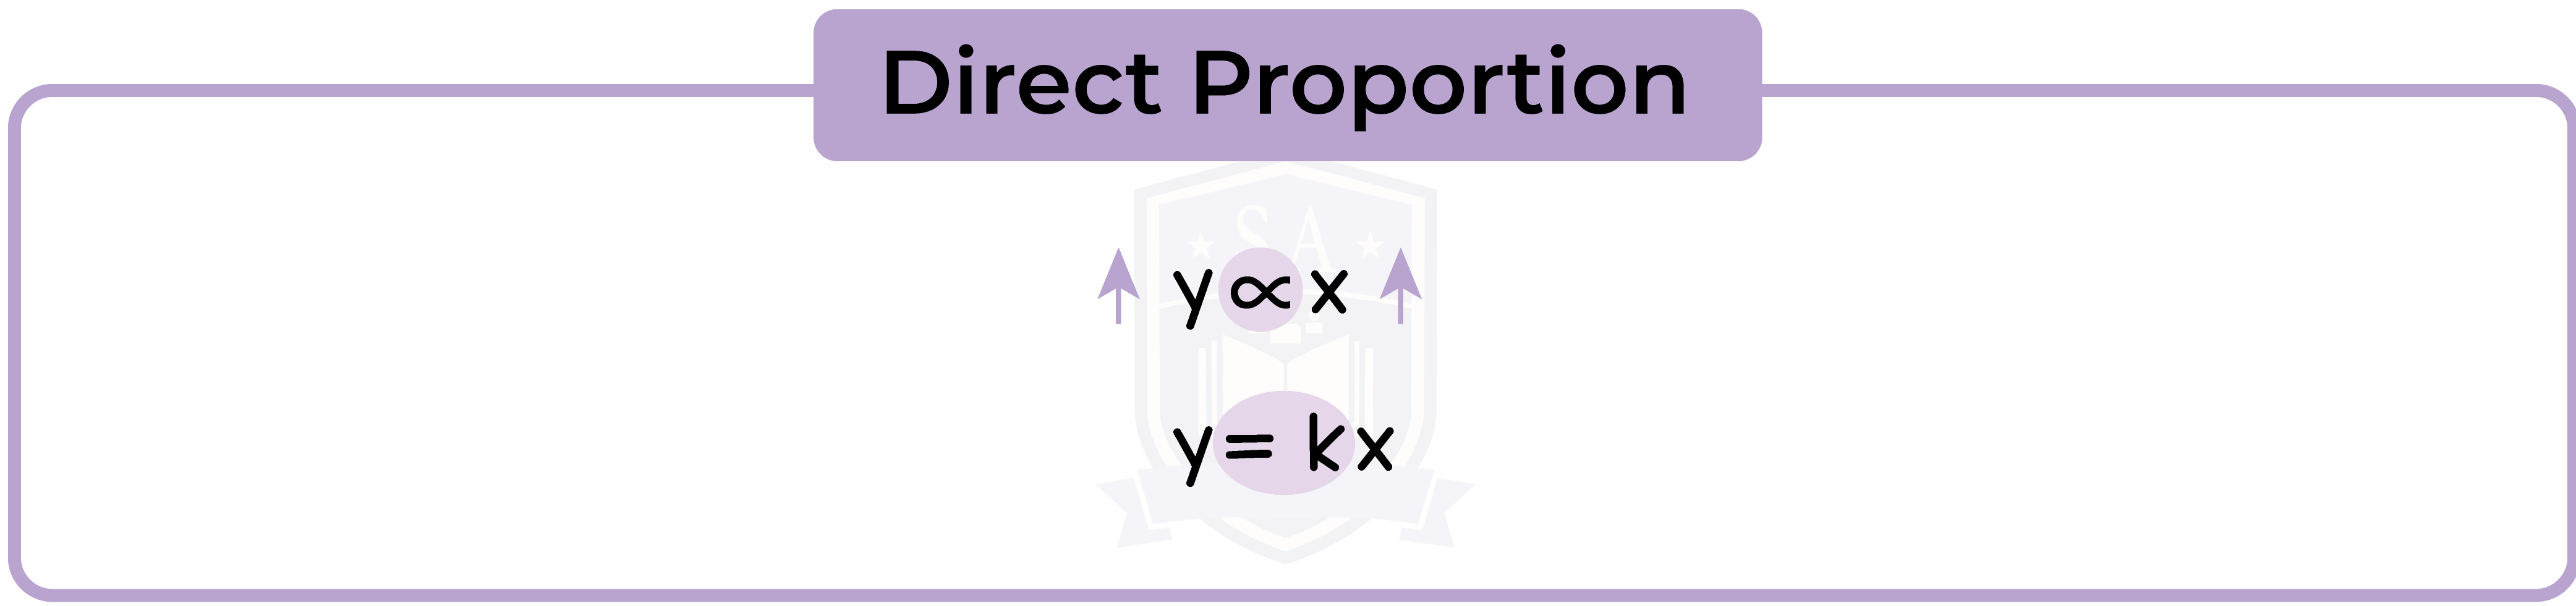 edexcel_igcse_mathematics a_topic 16_proportions_001_Direct Proportion